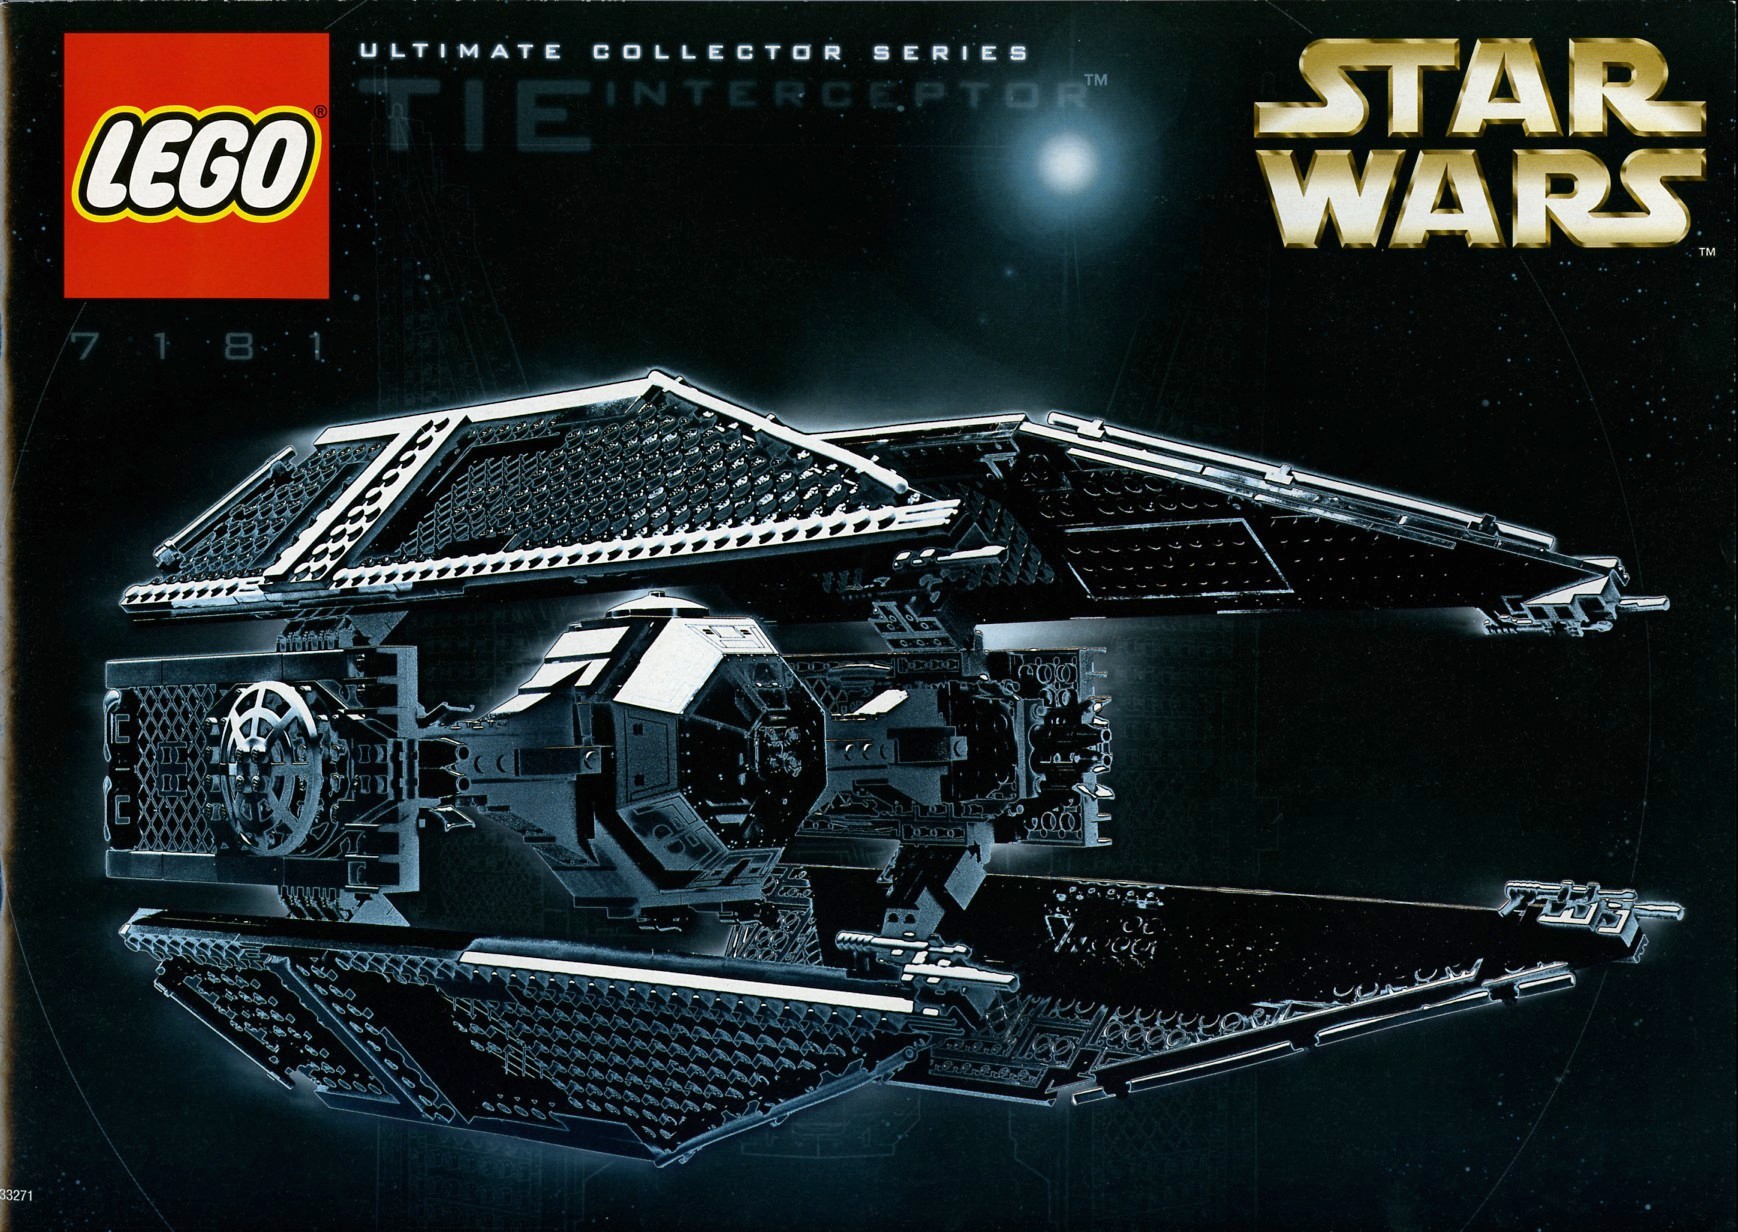 Wars | Ultimate Collector Series | Brickset: LEGO set and database